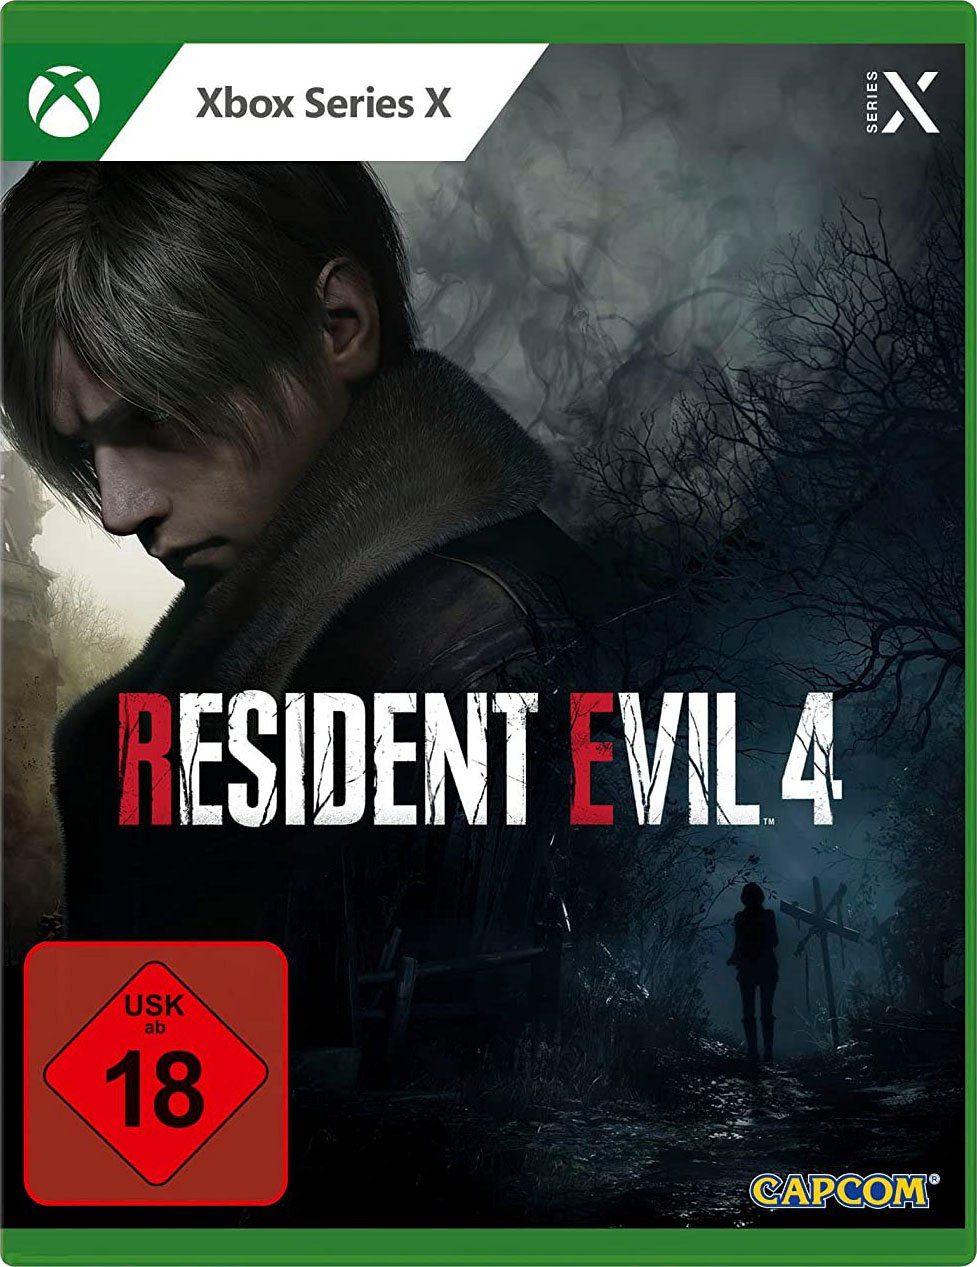 X 4 Evil Remake Capcom Resident Series Xbox